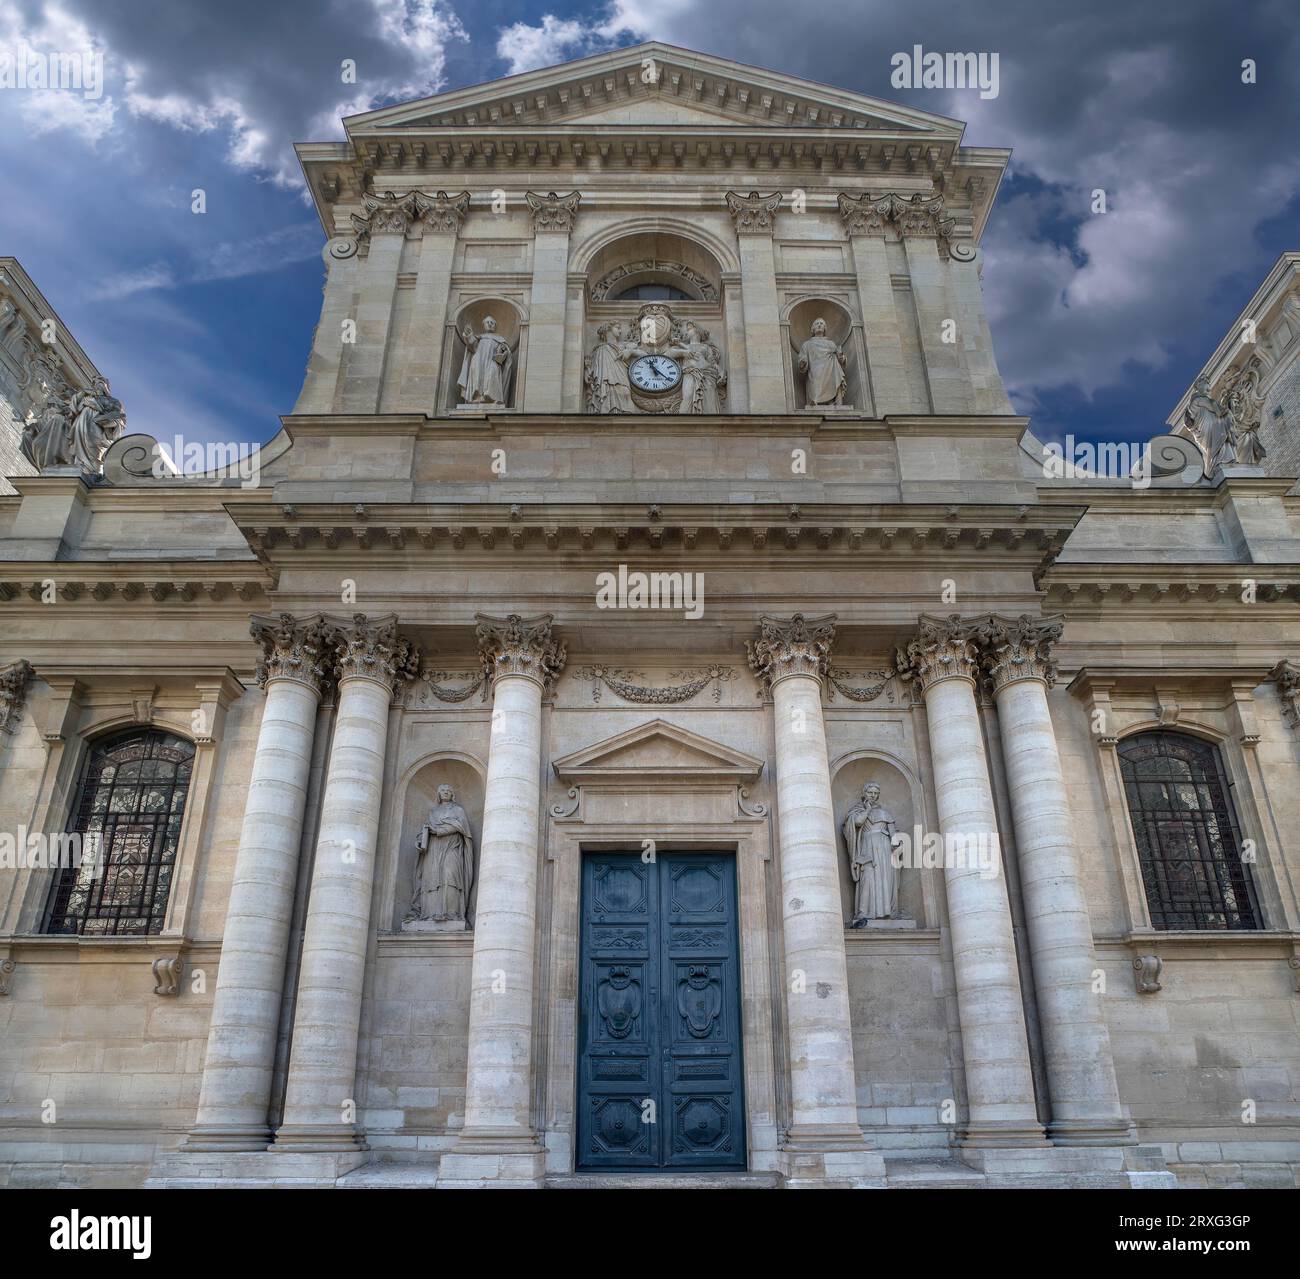 Fassade der barocken Kapelle der Sorbonne, Place de la Sorbonne, Paris, Frankreich Stockfoto